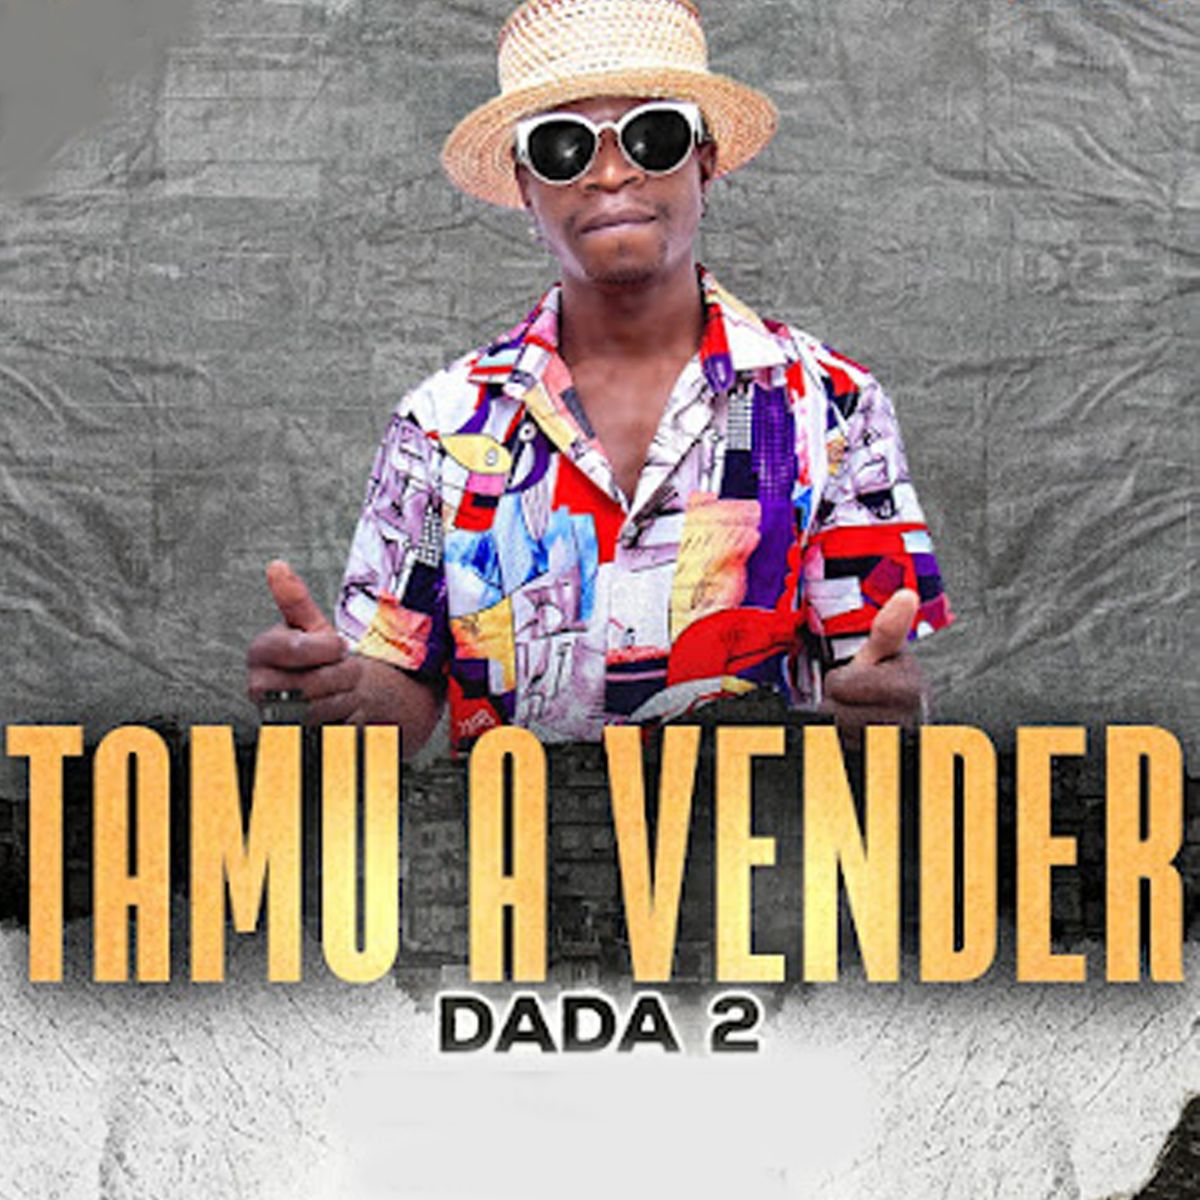 Dadá 2 - Tamu a Vender (feat. Dj Fragoso)